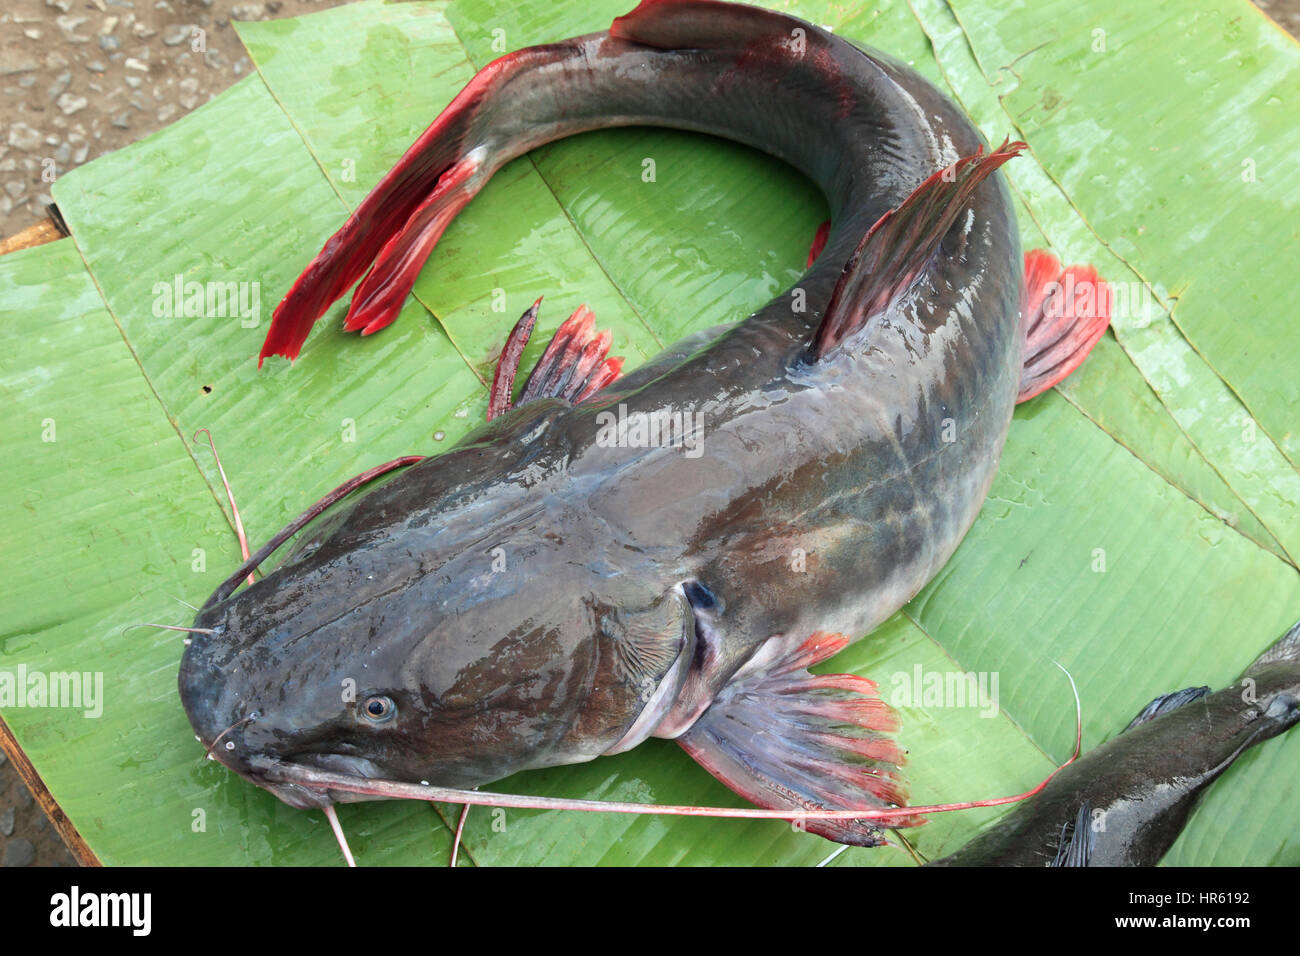 Laos, Luang Prabang, market, catfish, Stock Photo